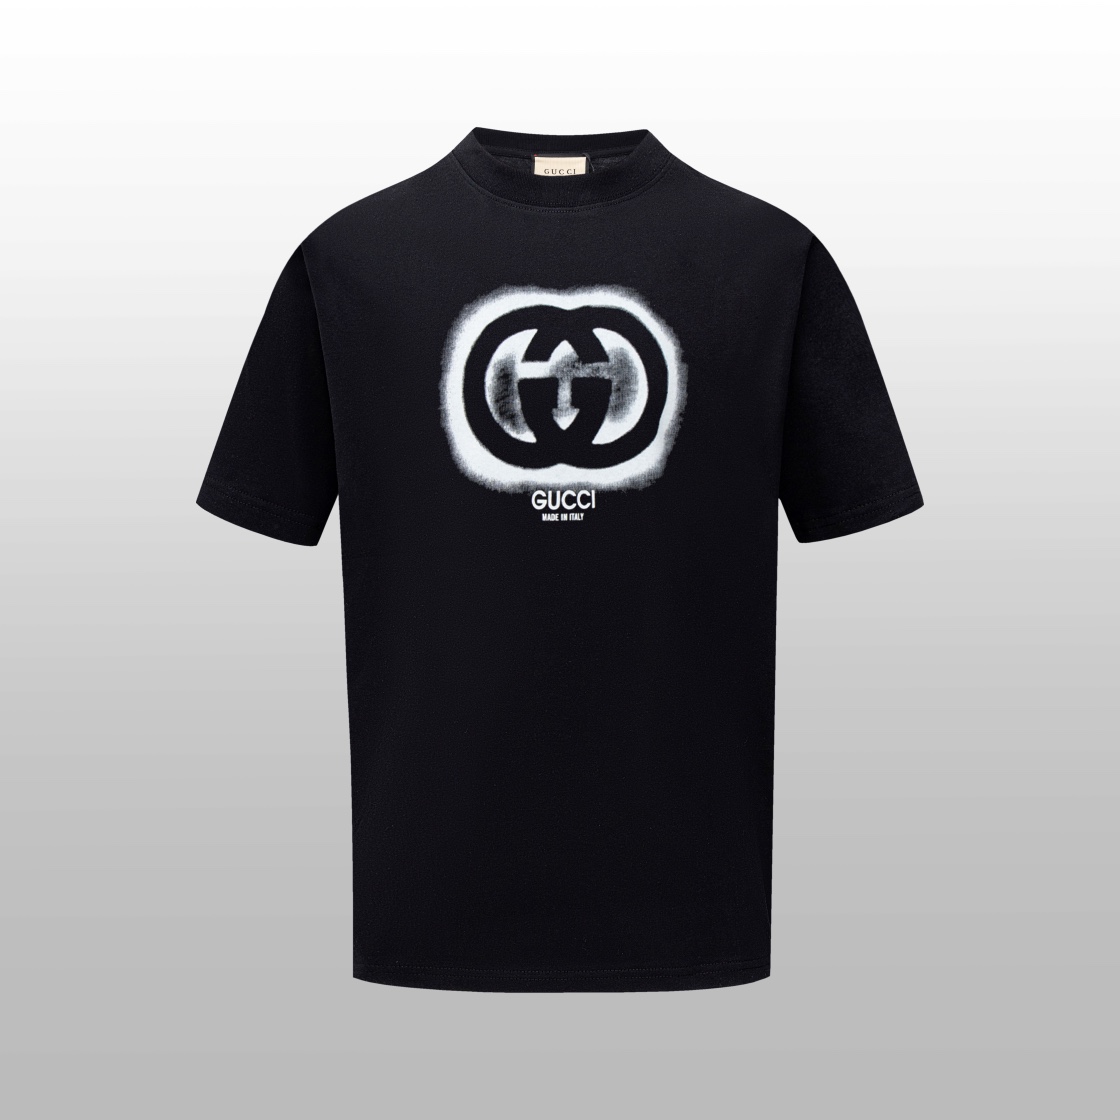 Gucci AAA
 Clothing T-Shirt Black White Printing Unisex Short Sleeve